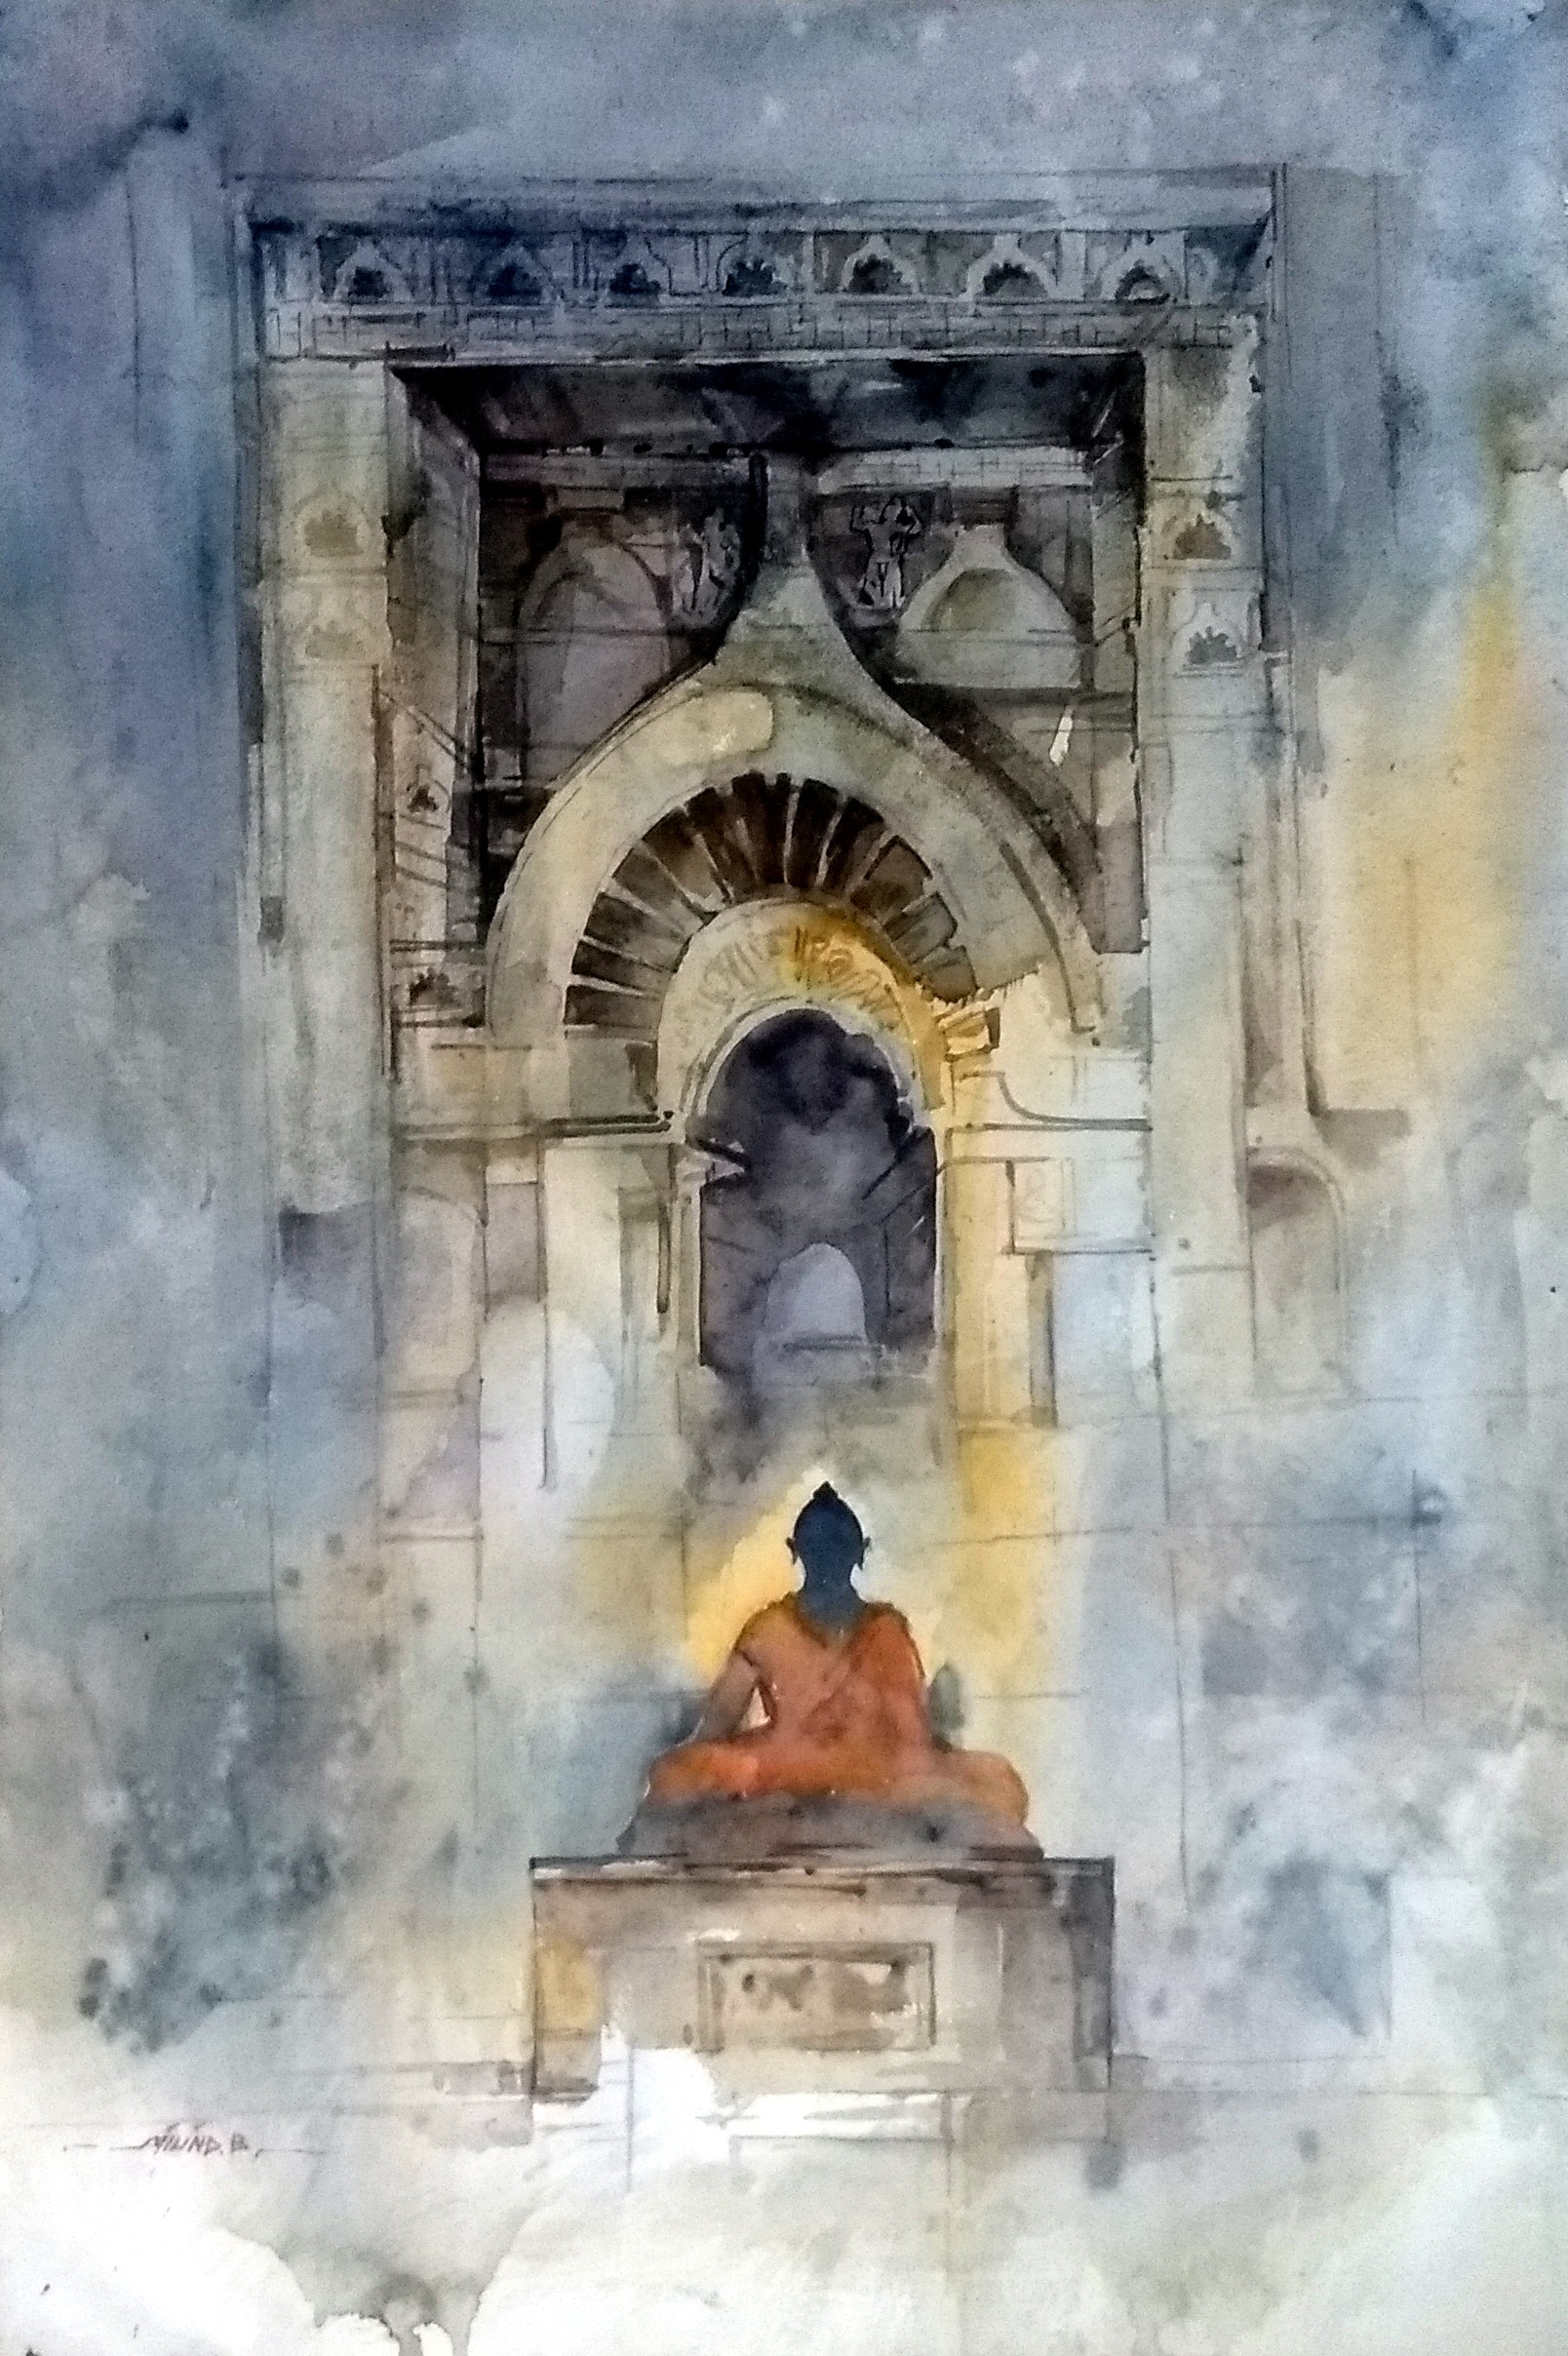 Budha's Way by Milind Bhanji